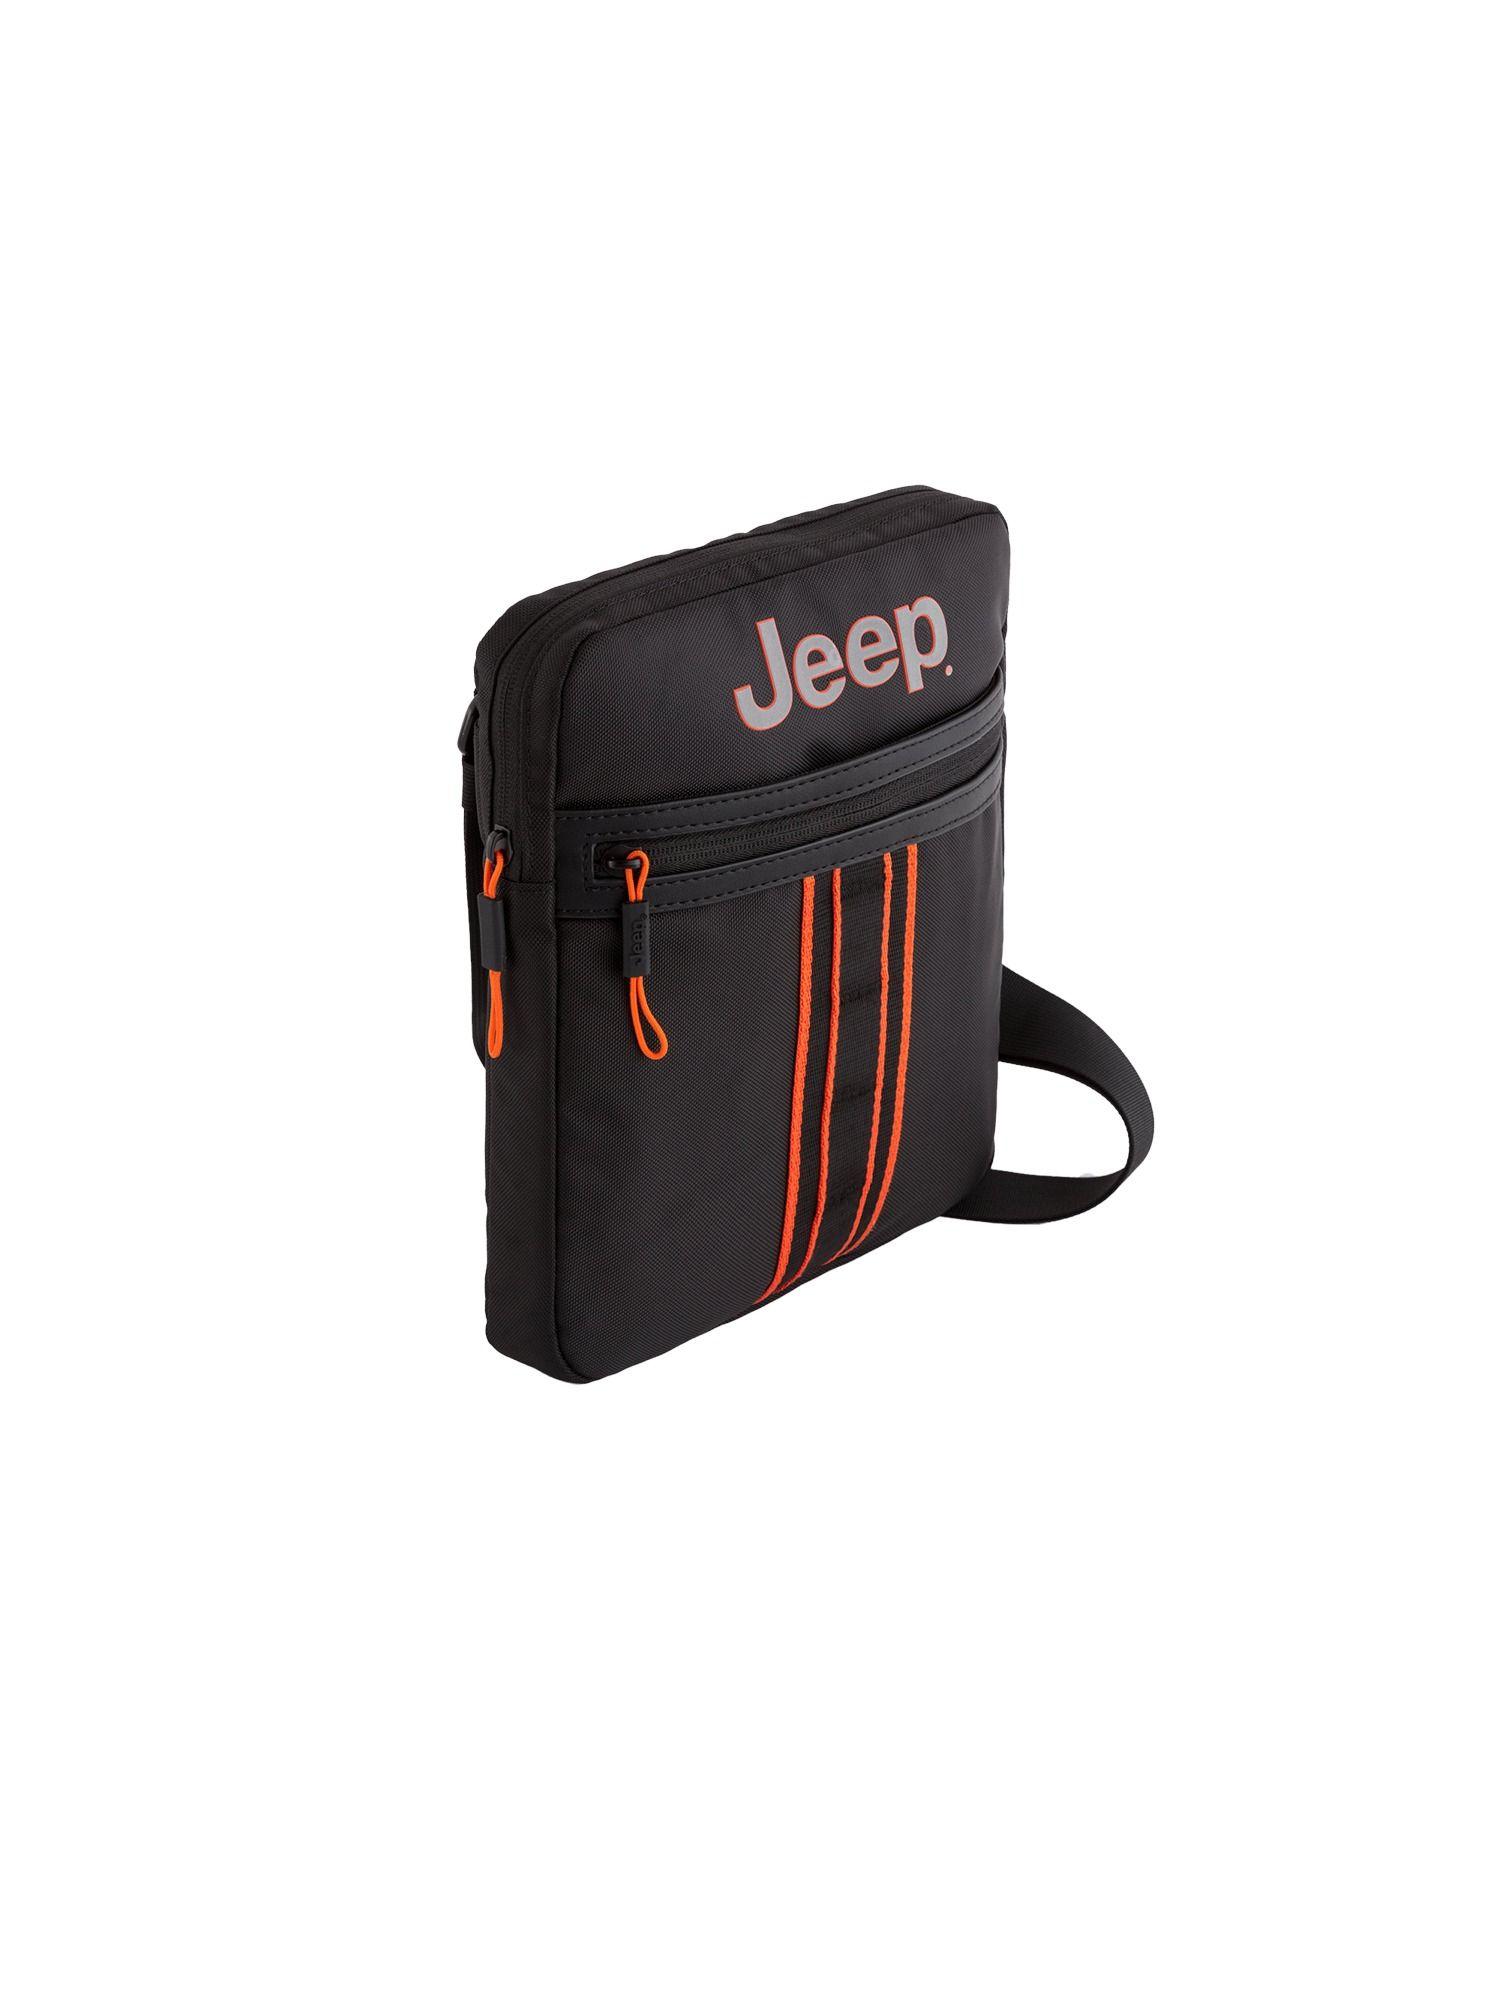 shoulder bag for men-alfa go (jeep)